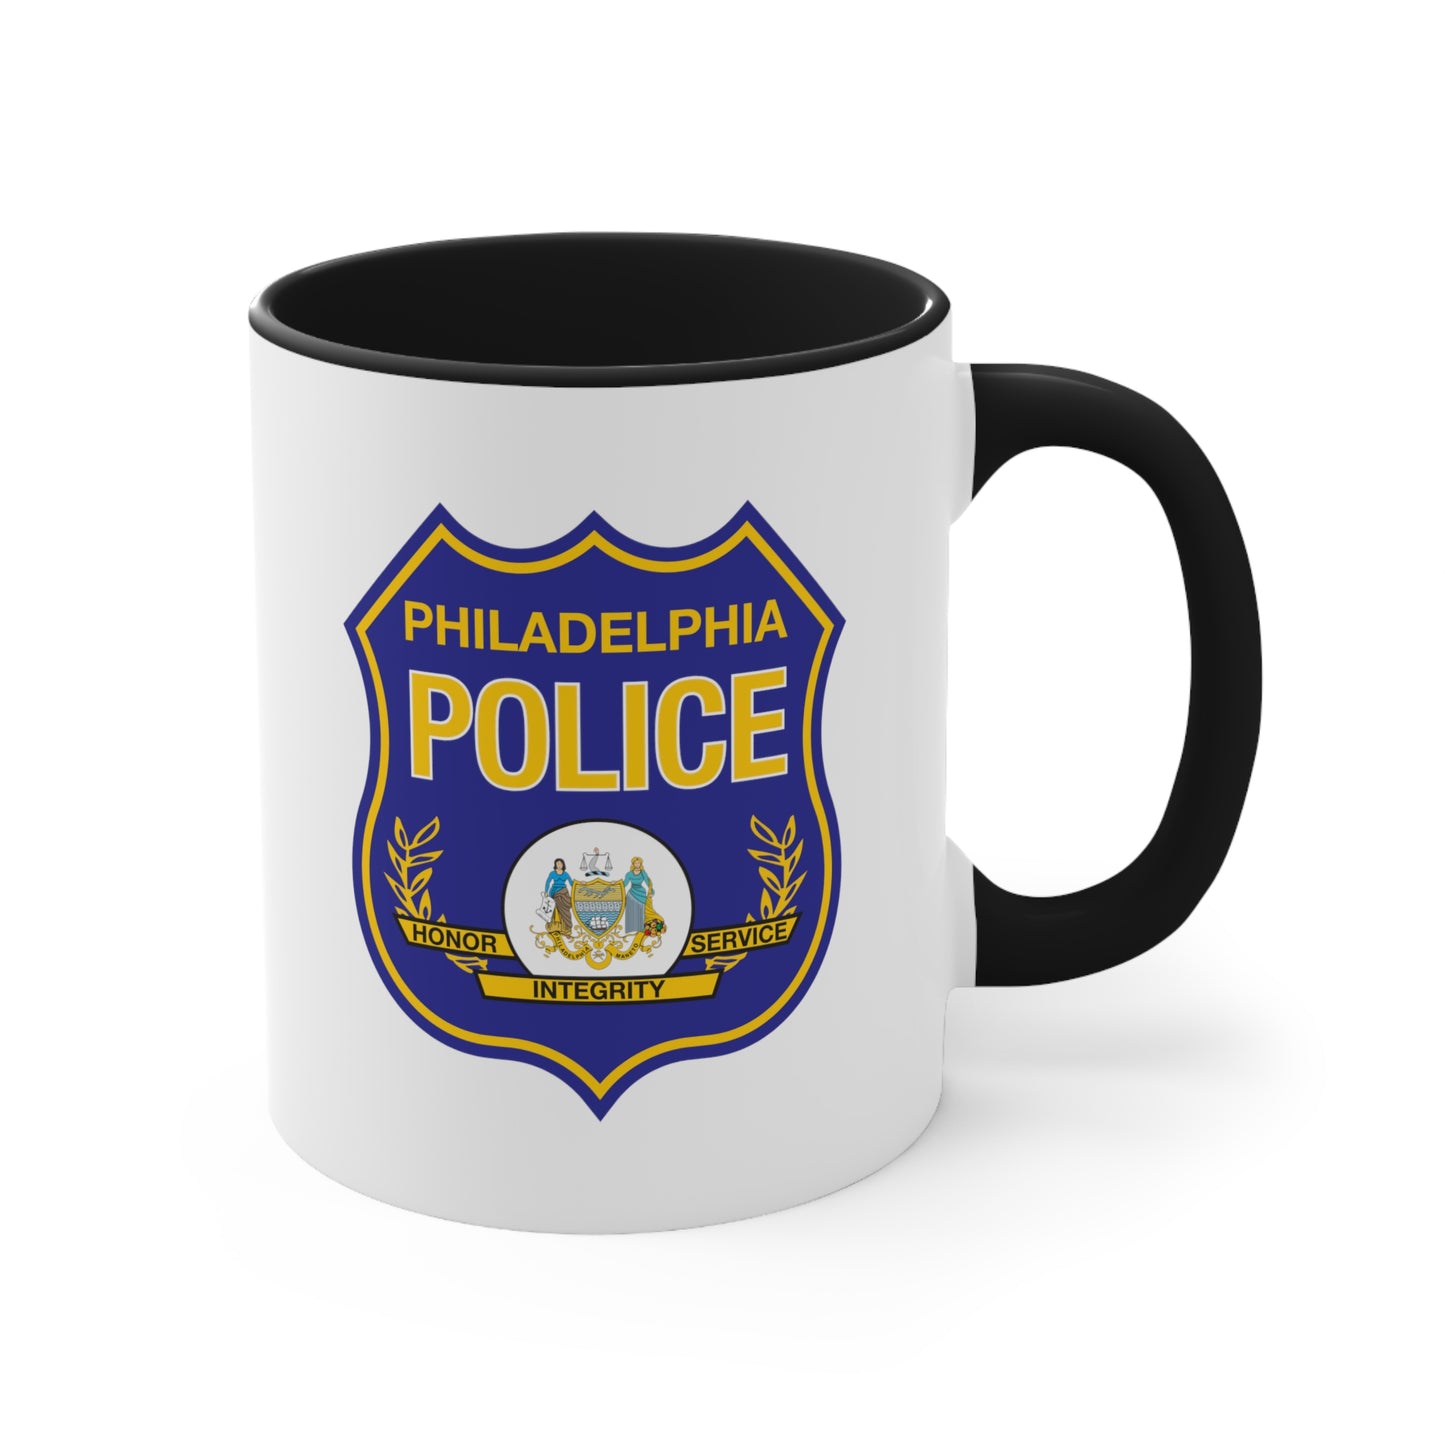 Philadelphia Police Coffee Mug - Double Sided Black Accent White Ceramic 11oz by TheGlassyLass.com